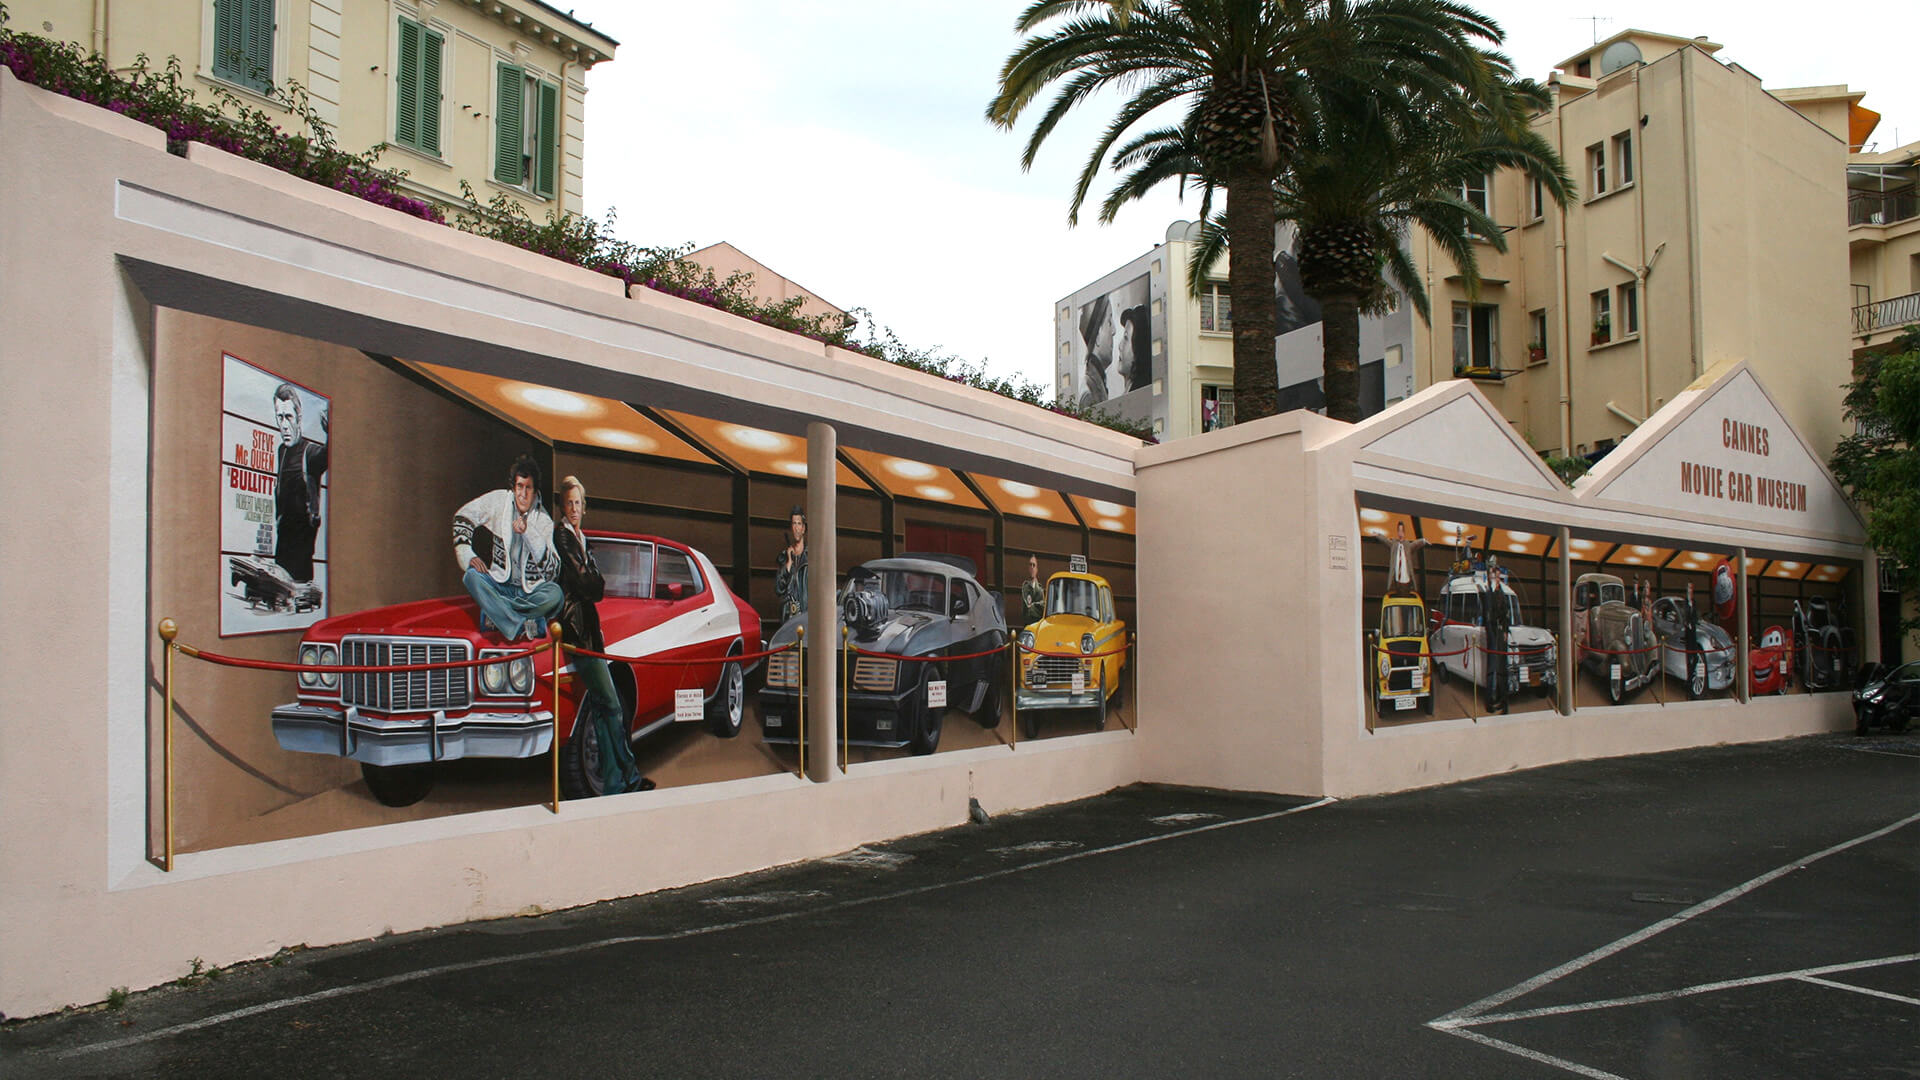 Cannes movie car museum